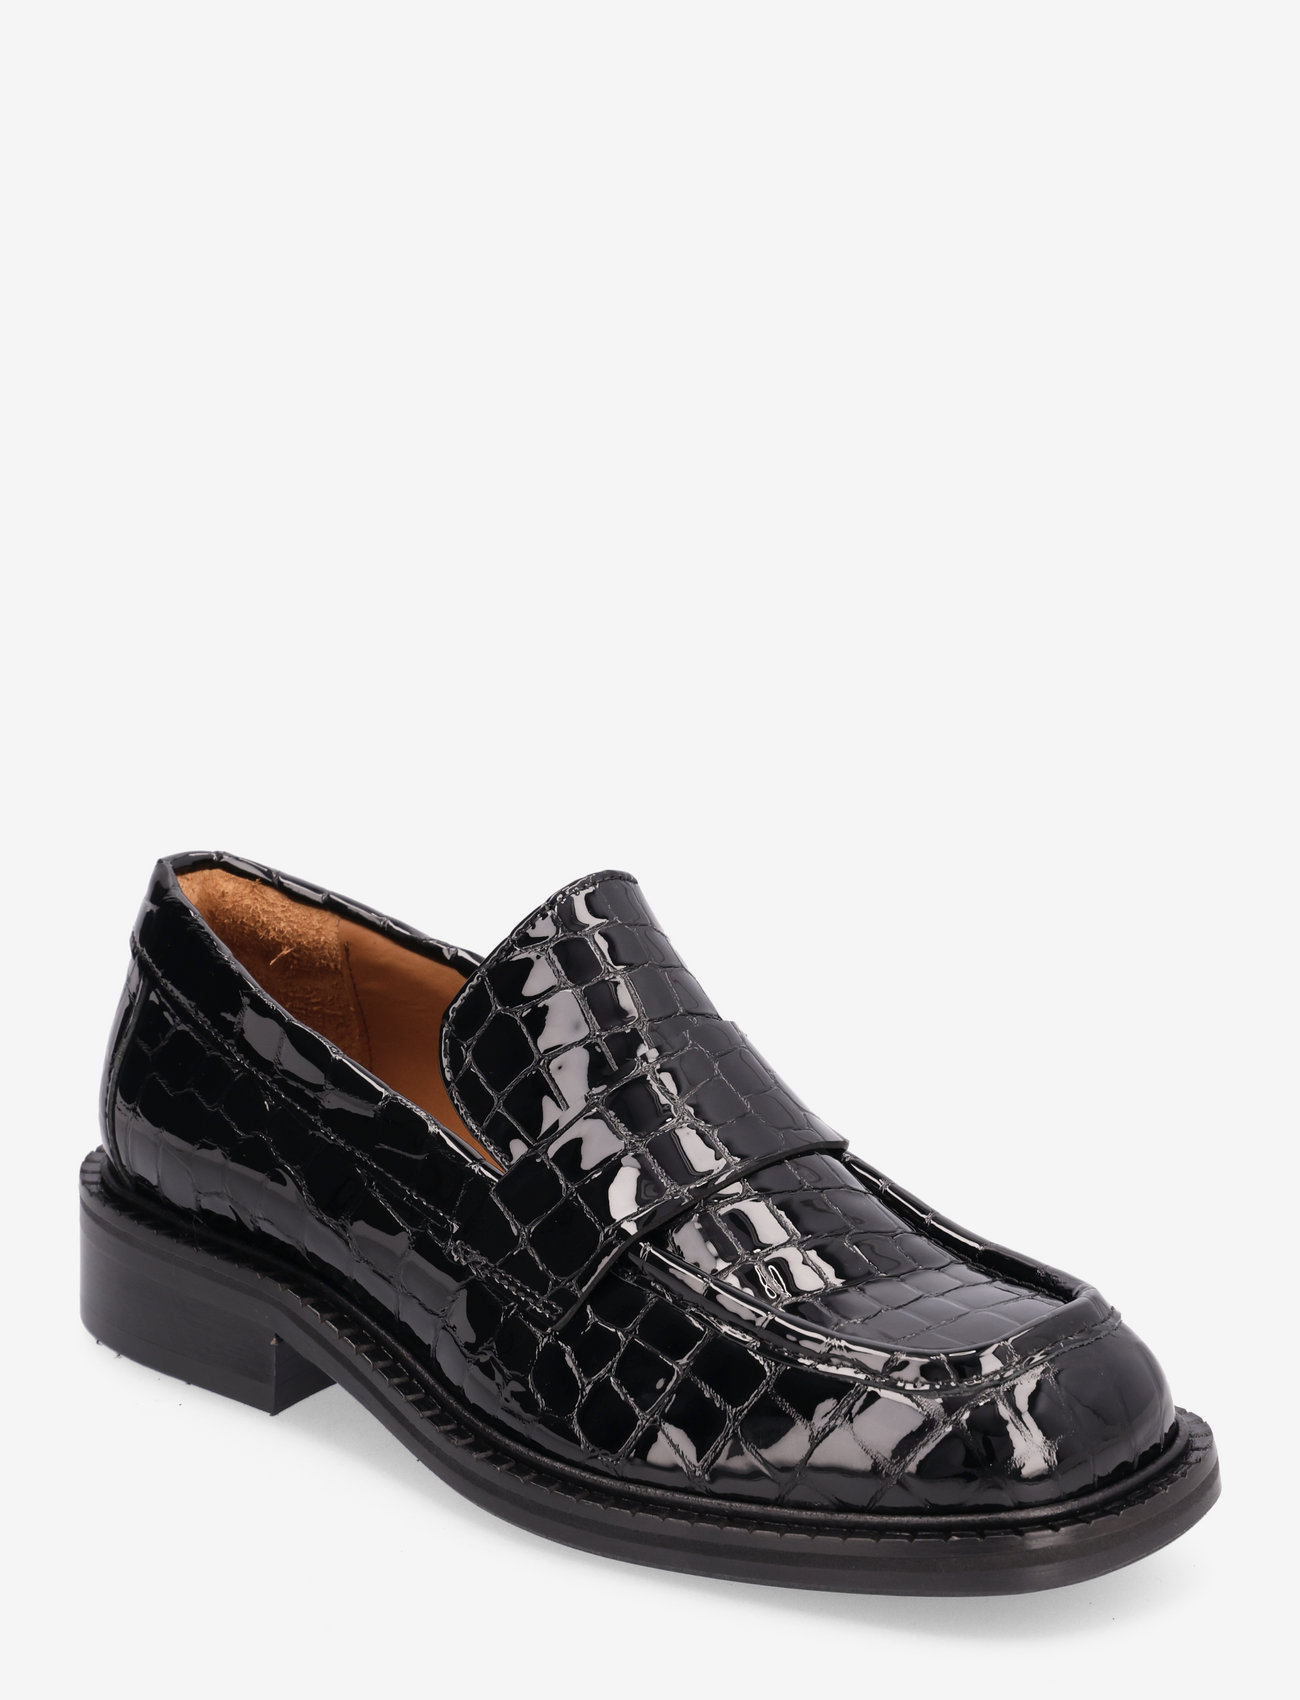 Billi Bi - Shoes - geburtstagsgeschenke - black croco patent - 0